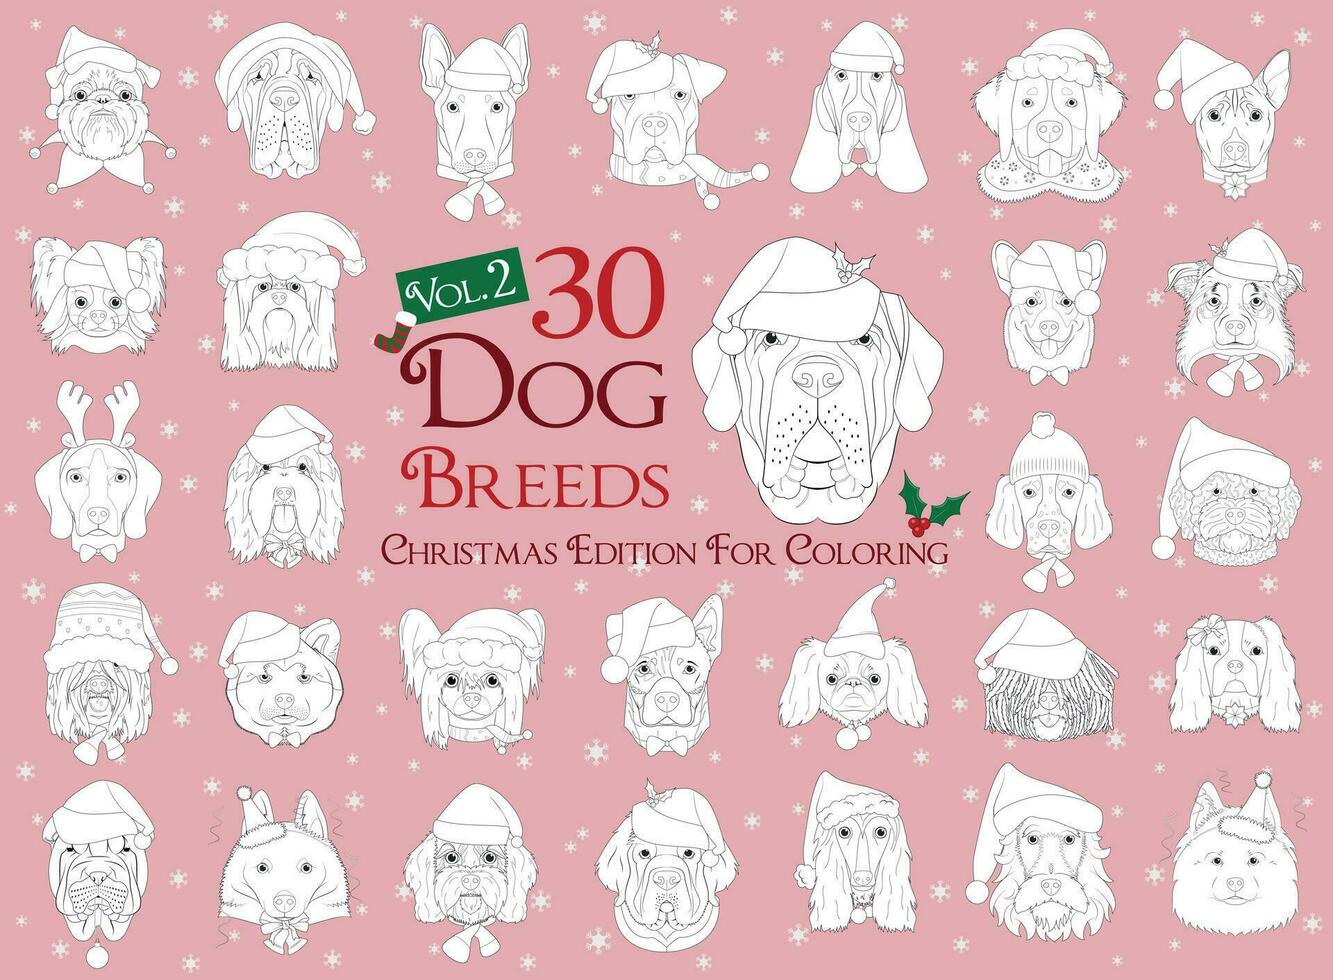 reeks van 30 hond rassen voor kleur met Kerstmis en winter thema's reeks 2 vector